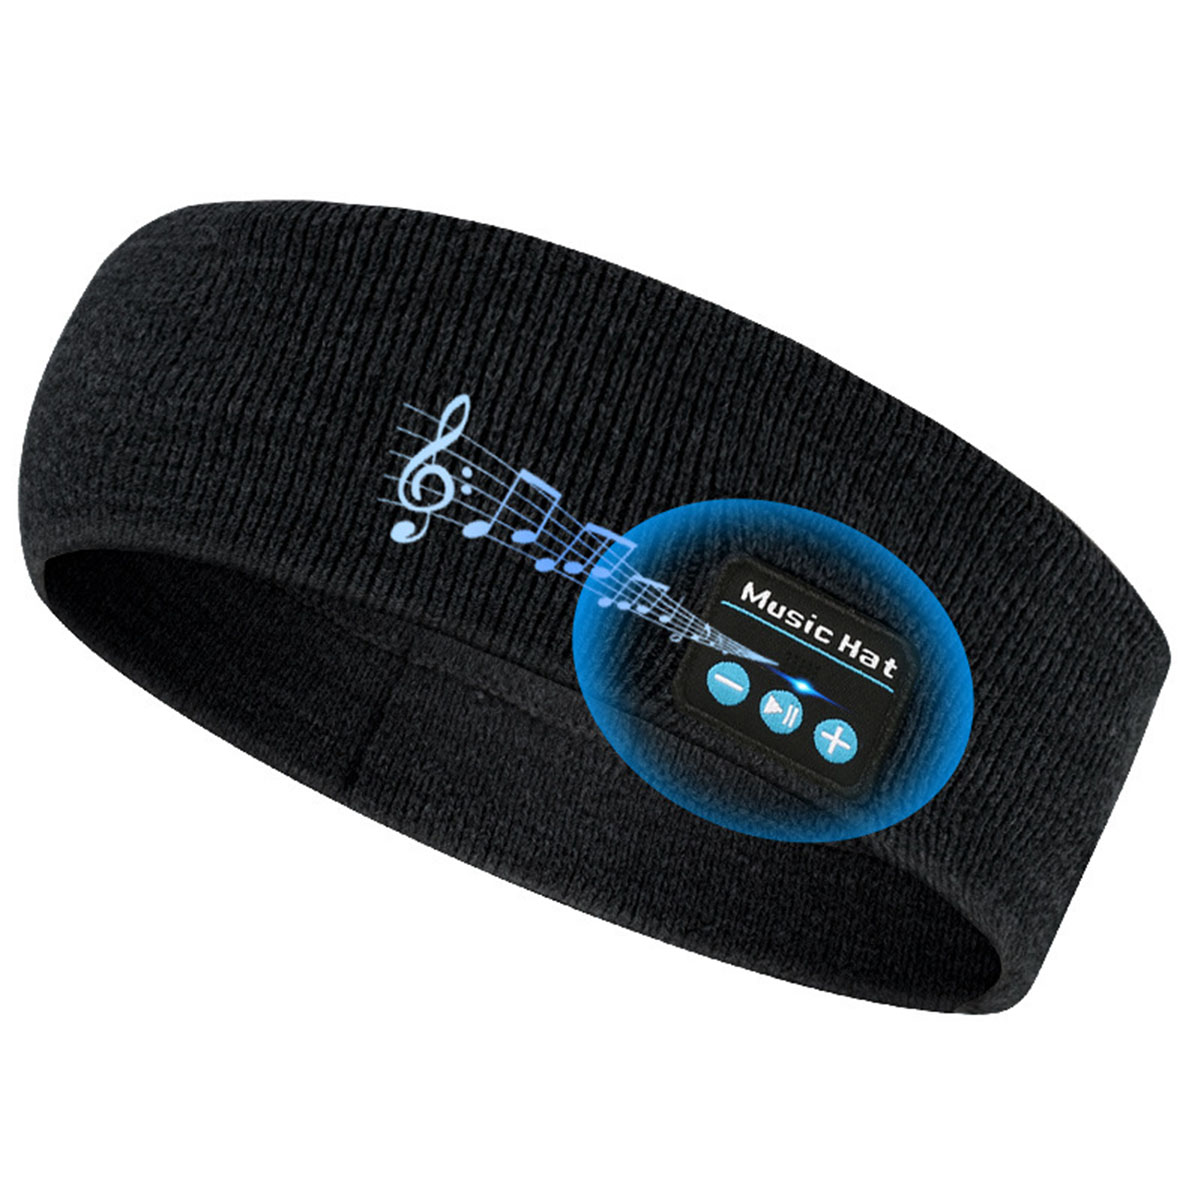 BRIGHTAKE Drahtlose Bluetooth und Anrufe Outdoor-Training Haarband - Musik beim Bandana